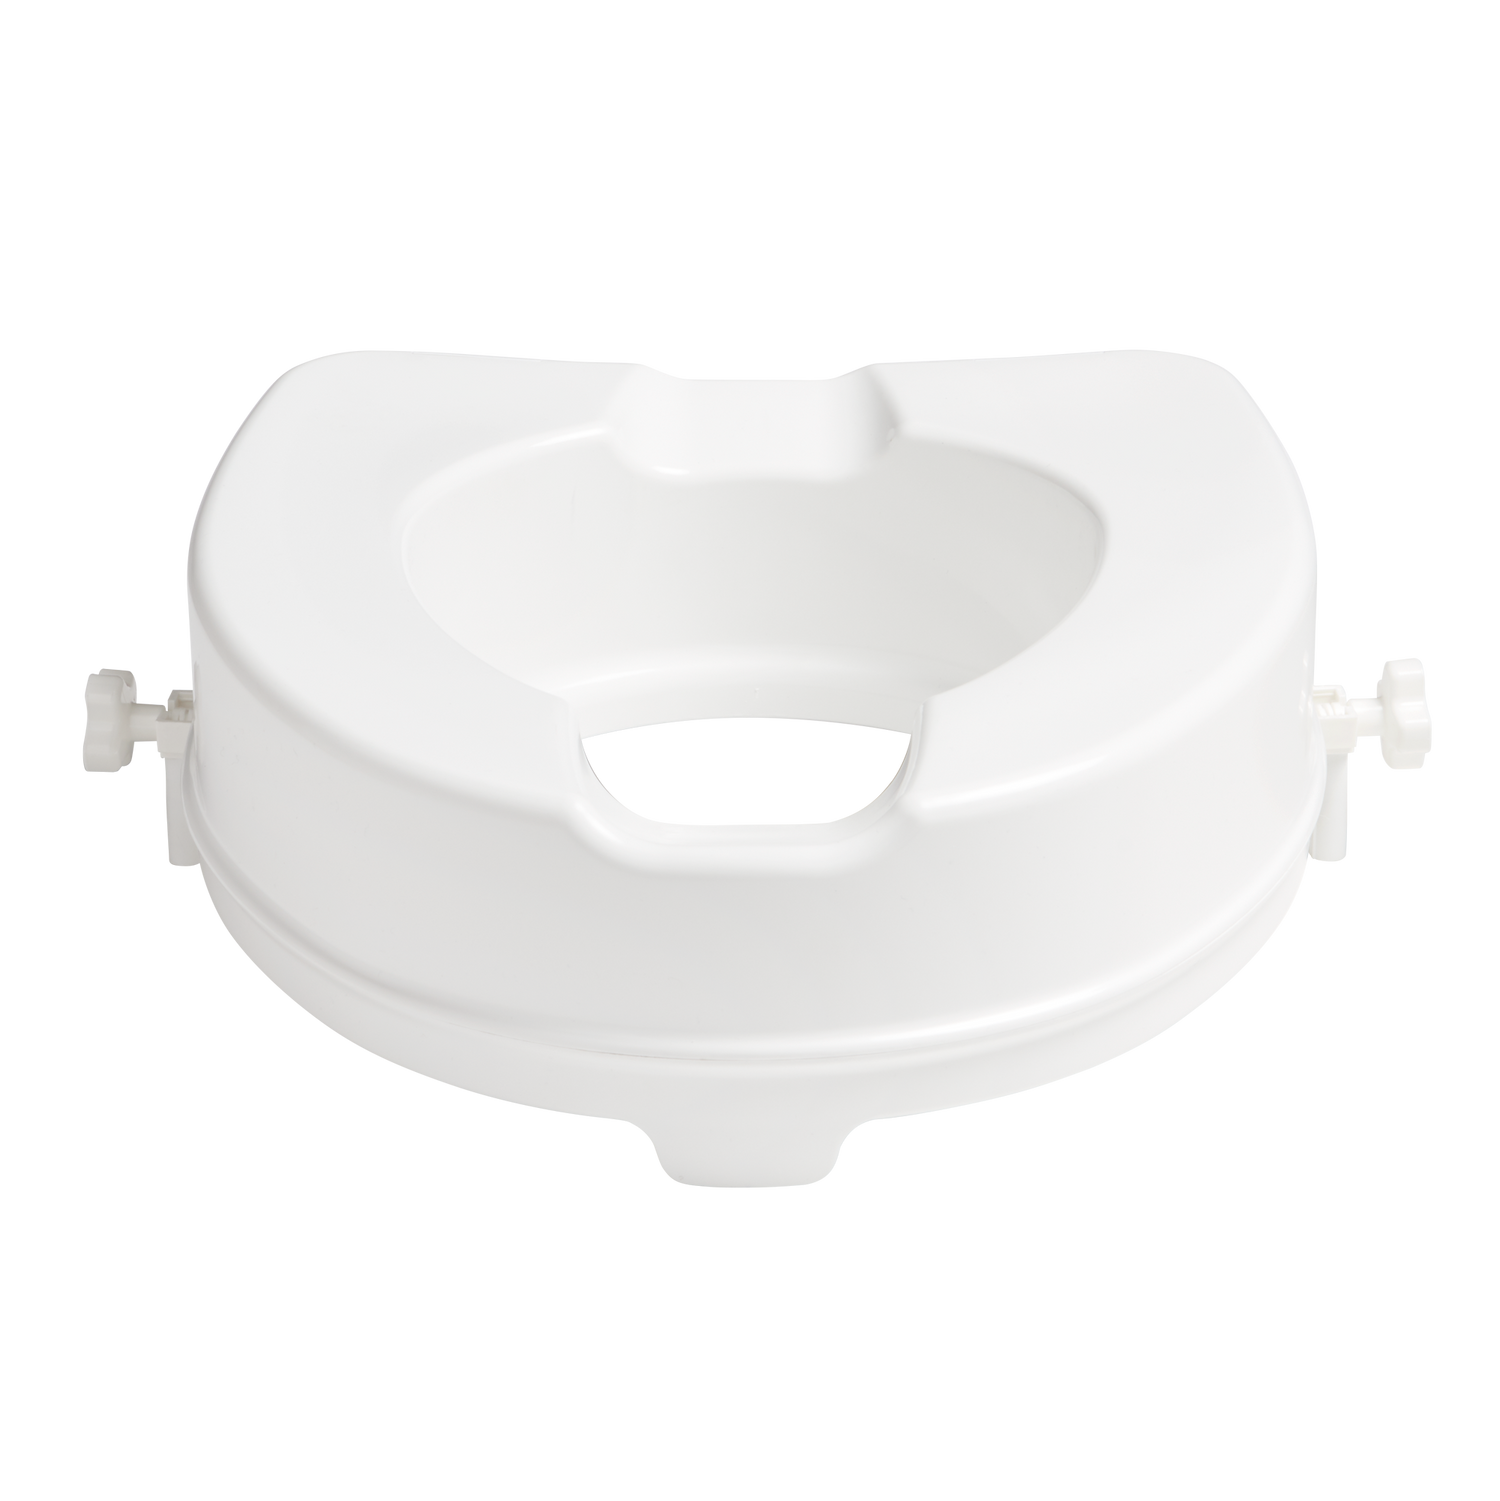 SecuCare Toilet seat raiser without lid